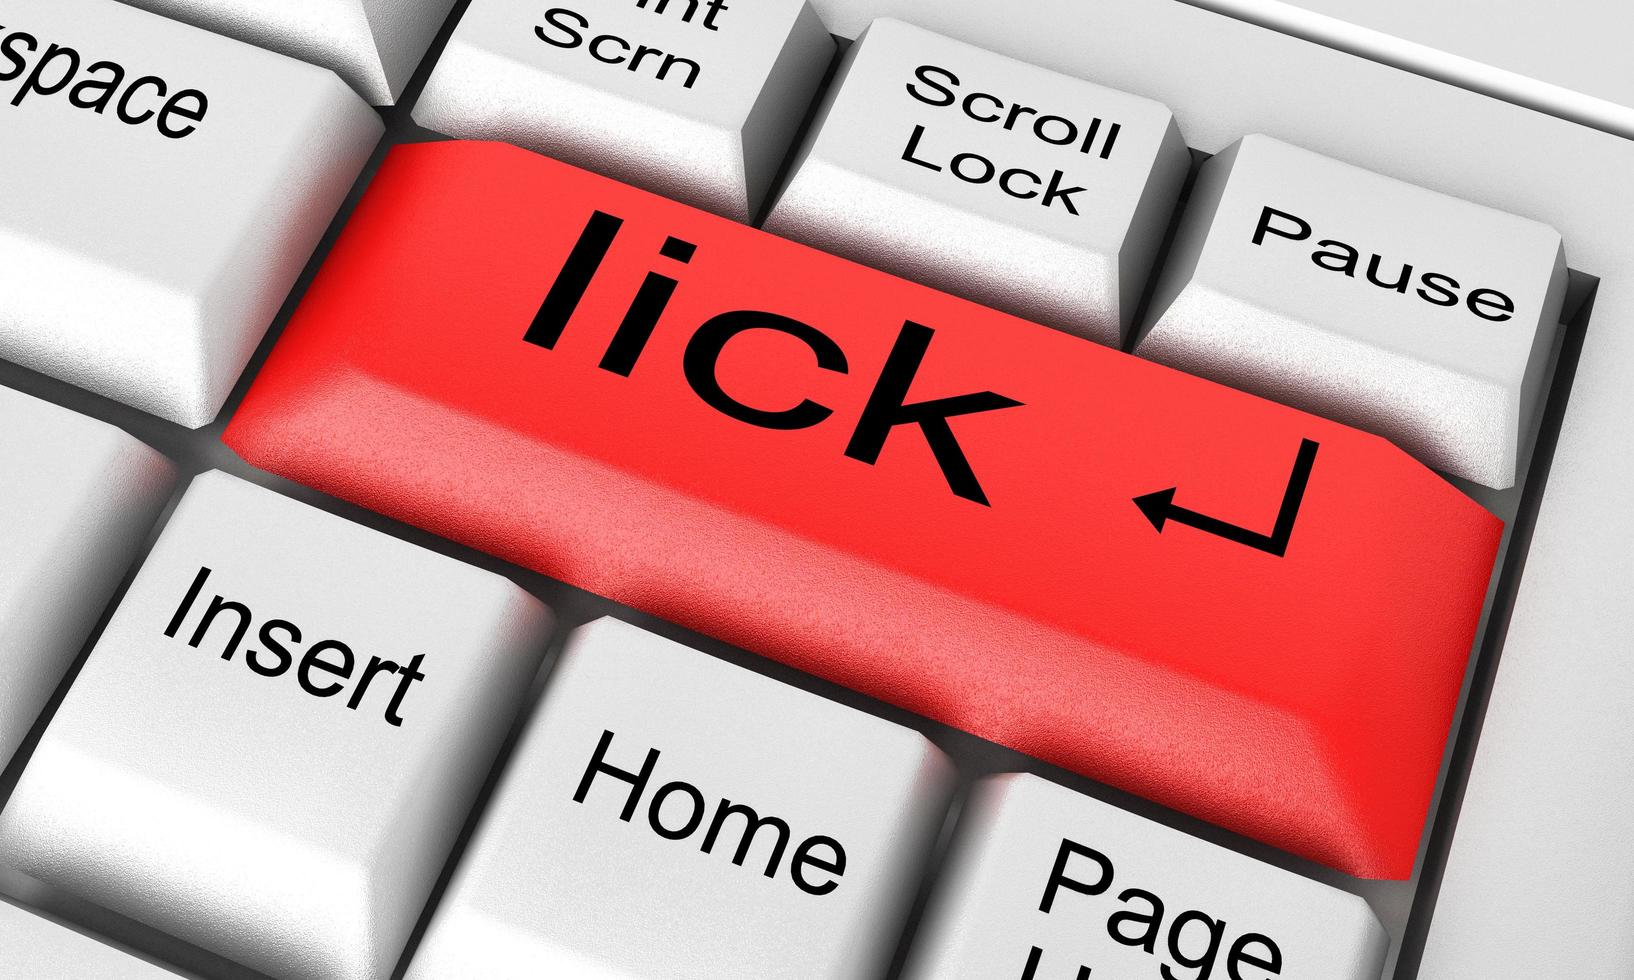 lick word on white keyboard photo